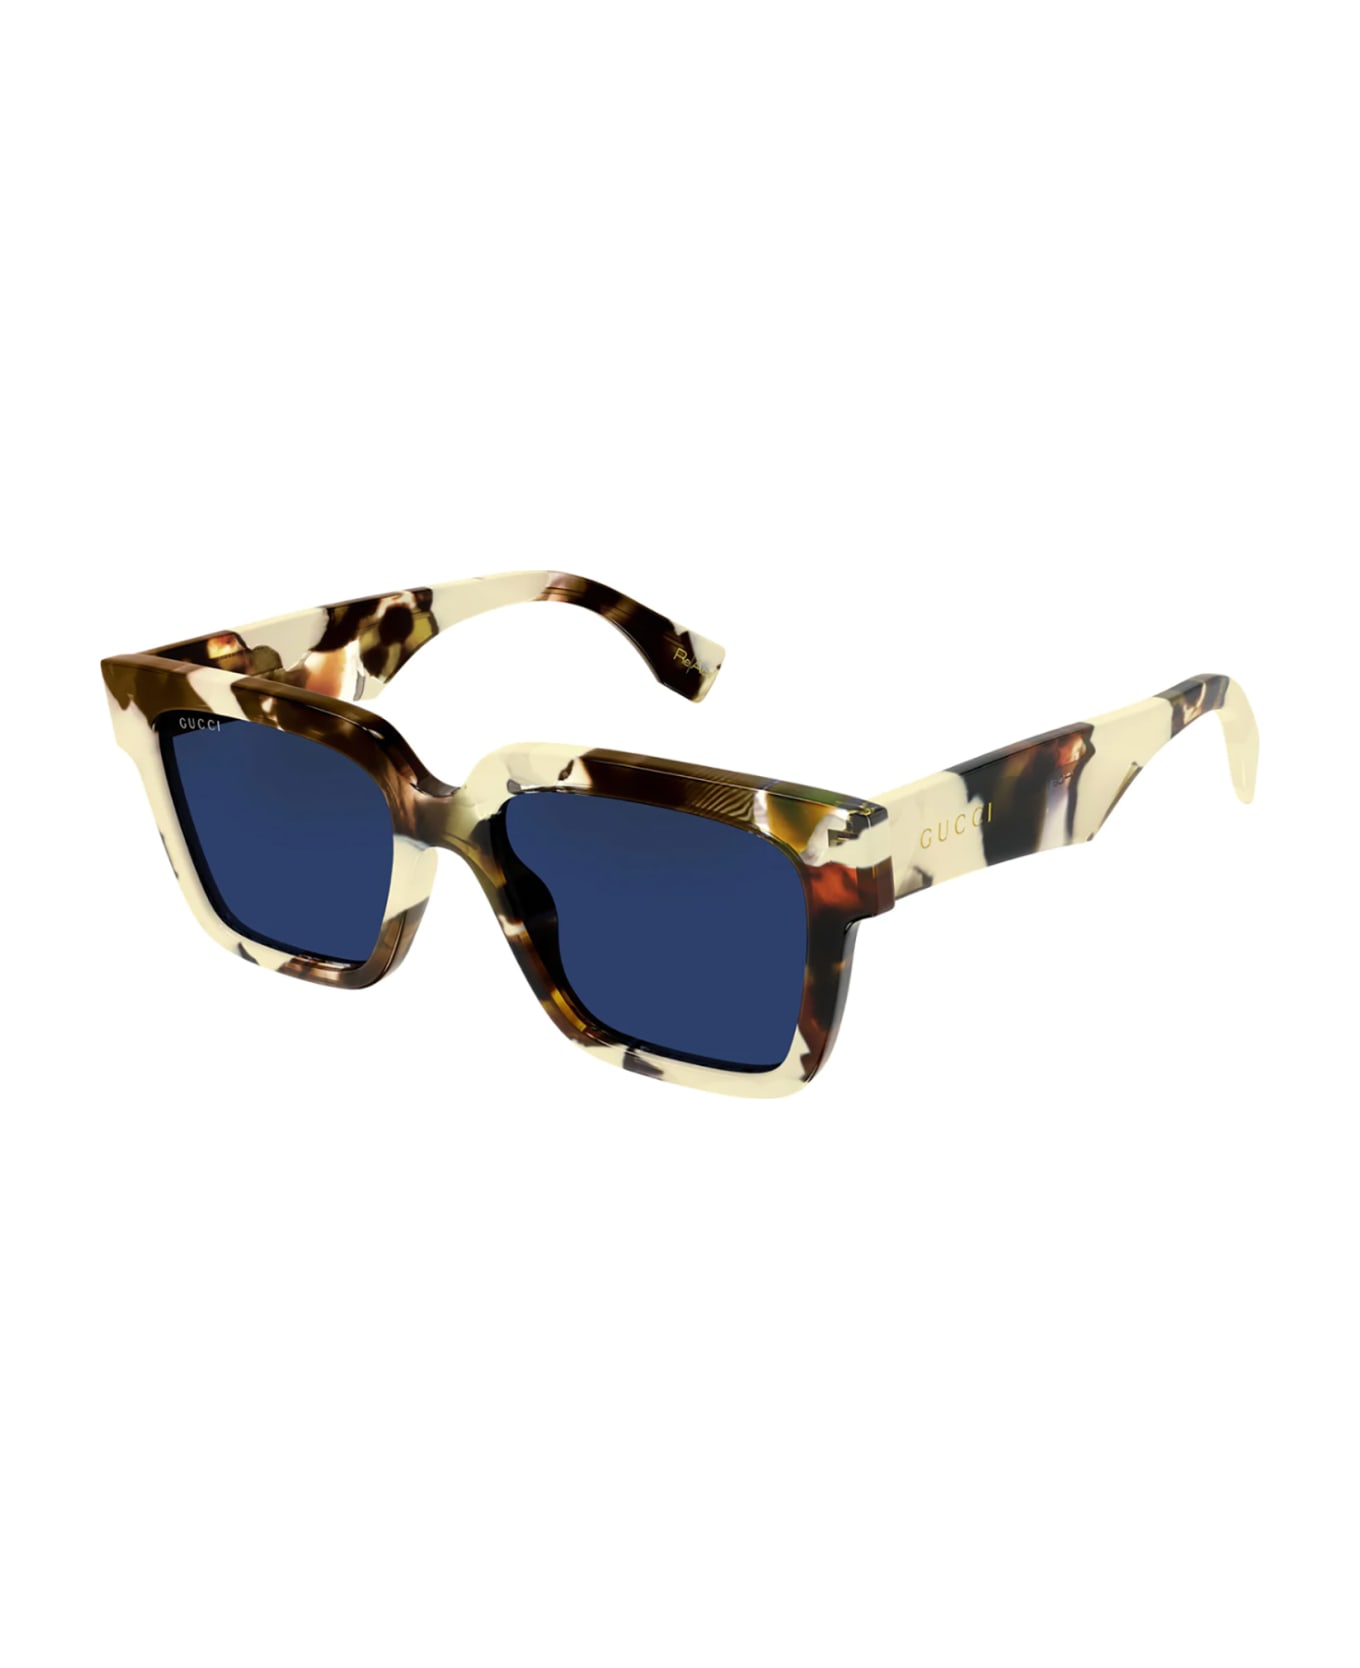 Gucci Eyewear GG1626S Sunglasses - Havana Havana Blue